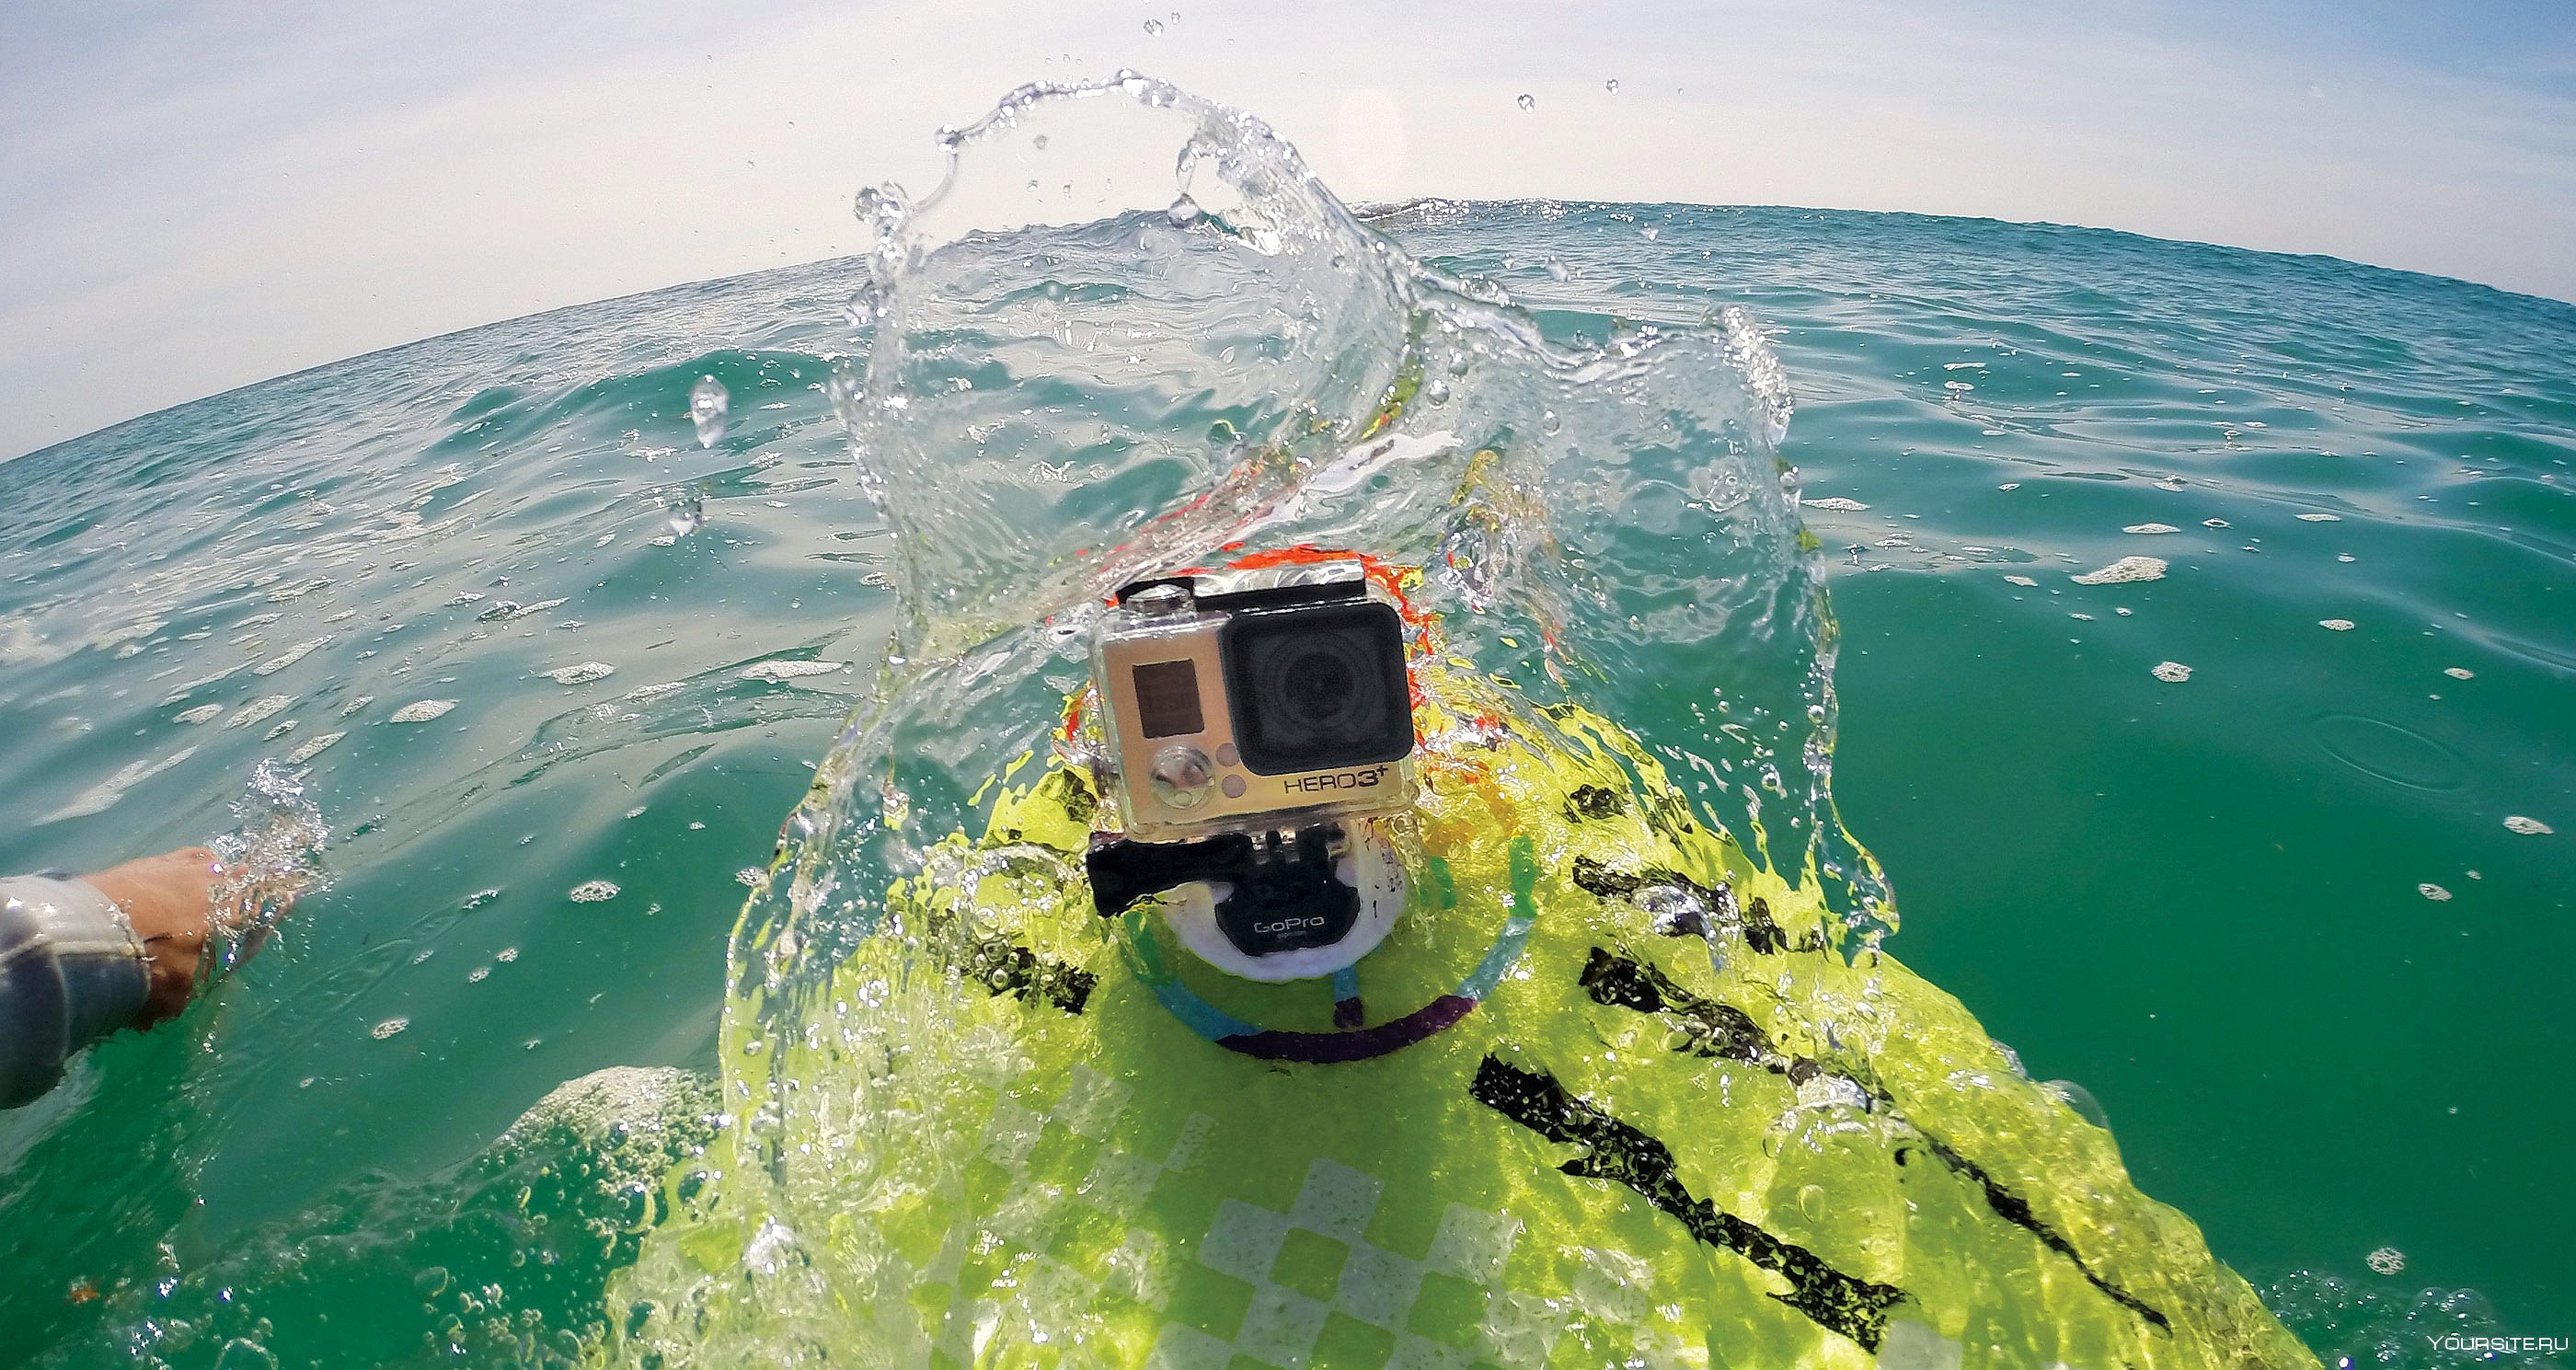 Го про ру. GOPRO крепление на штанге ABBRD-001 (Bodyboard Mount). Экшн камера GOPRO 8. Экшн камера Сигма. Камера гоу про под водой.